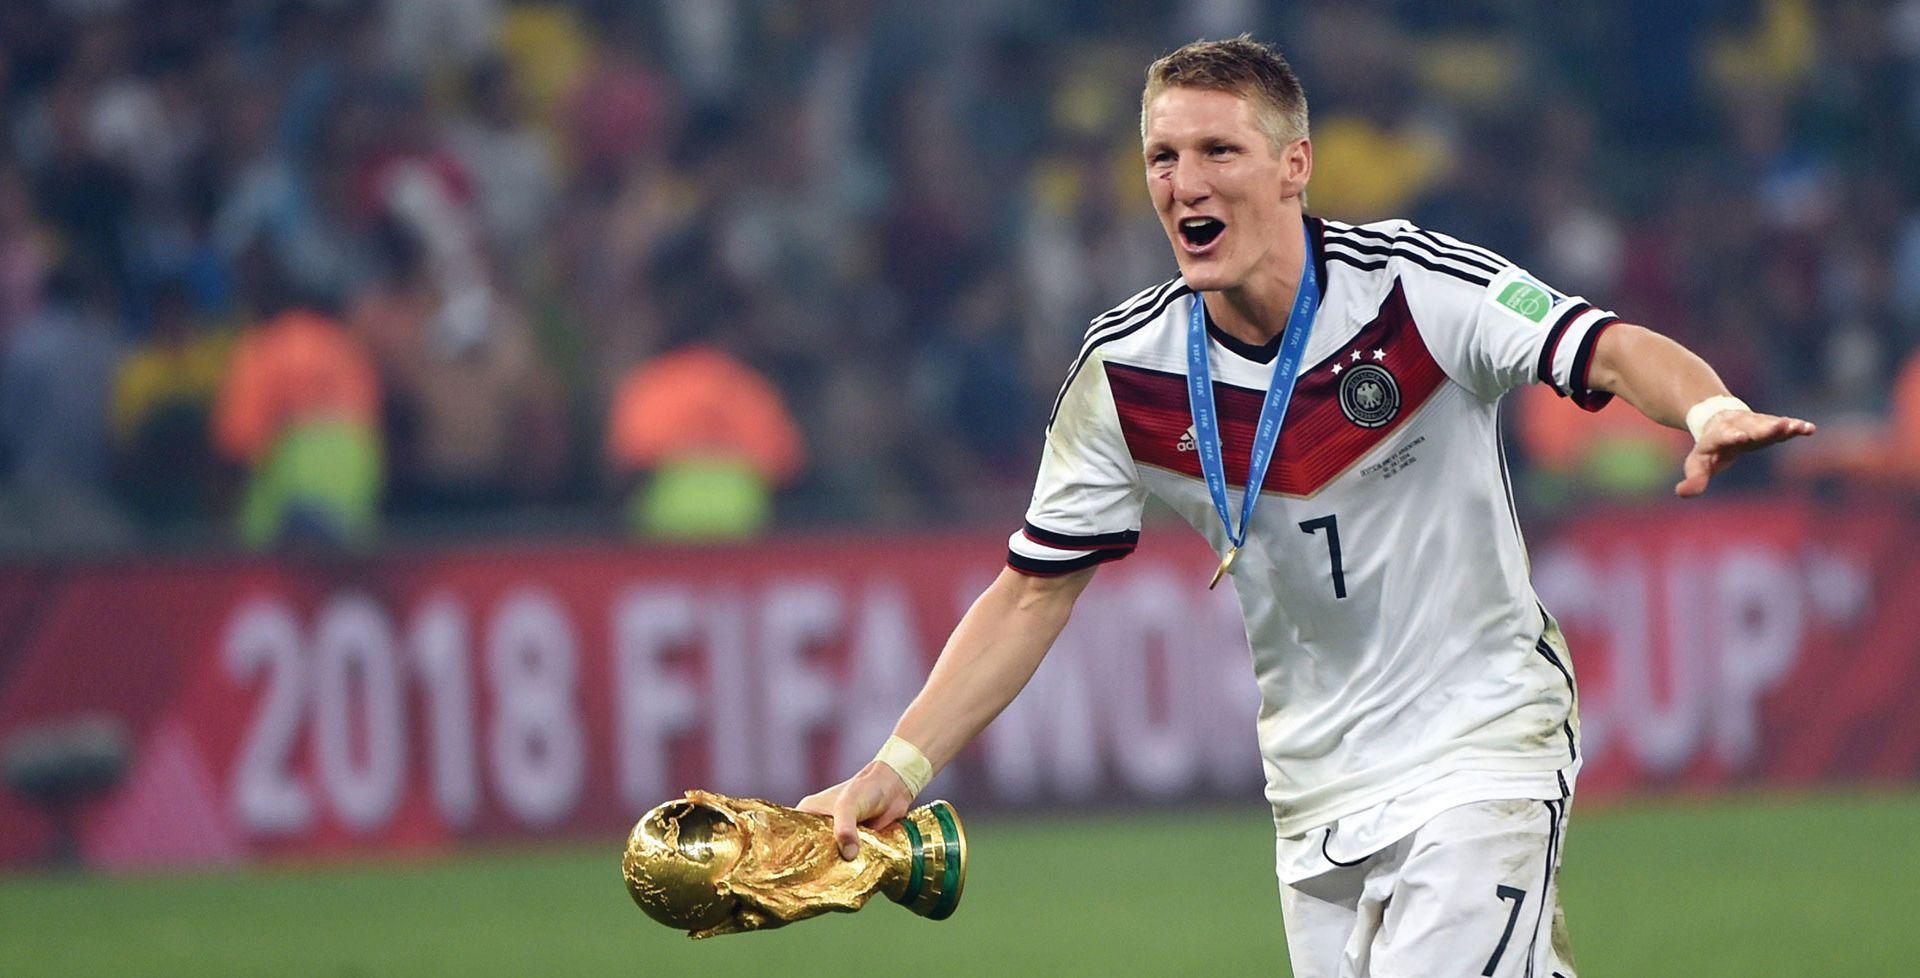 Bastian Schweinsteiger retires from Germany national team